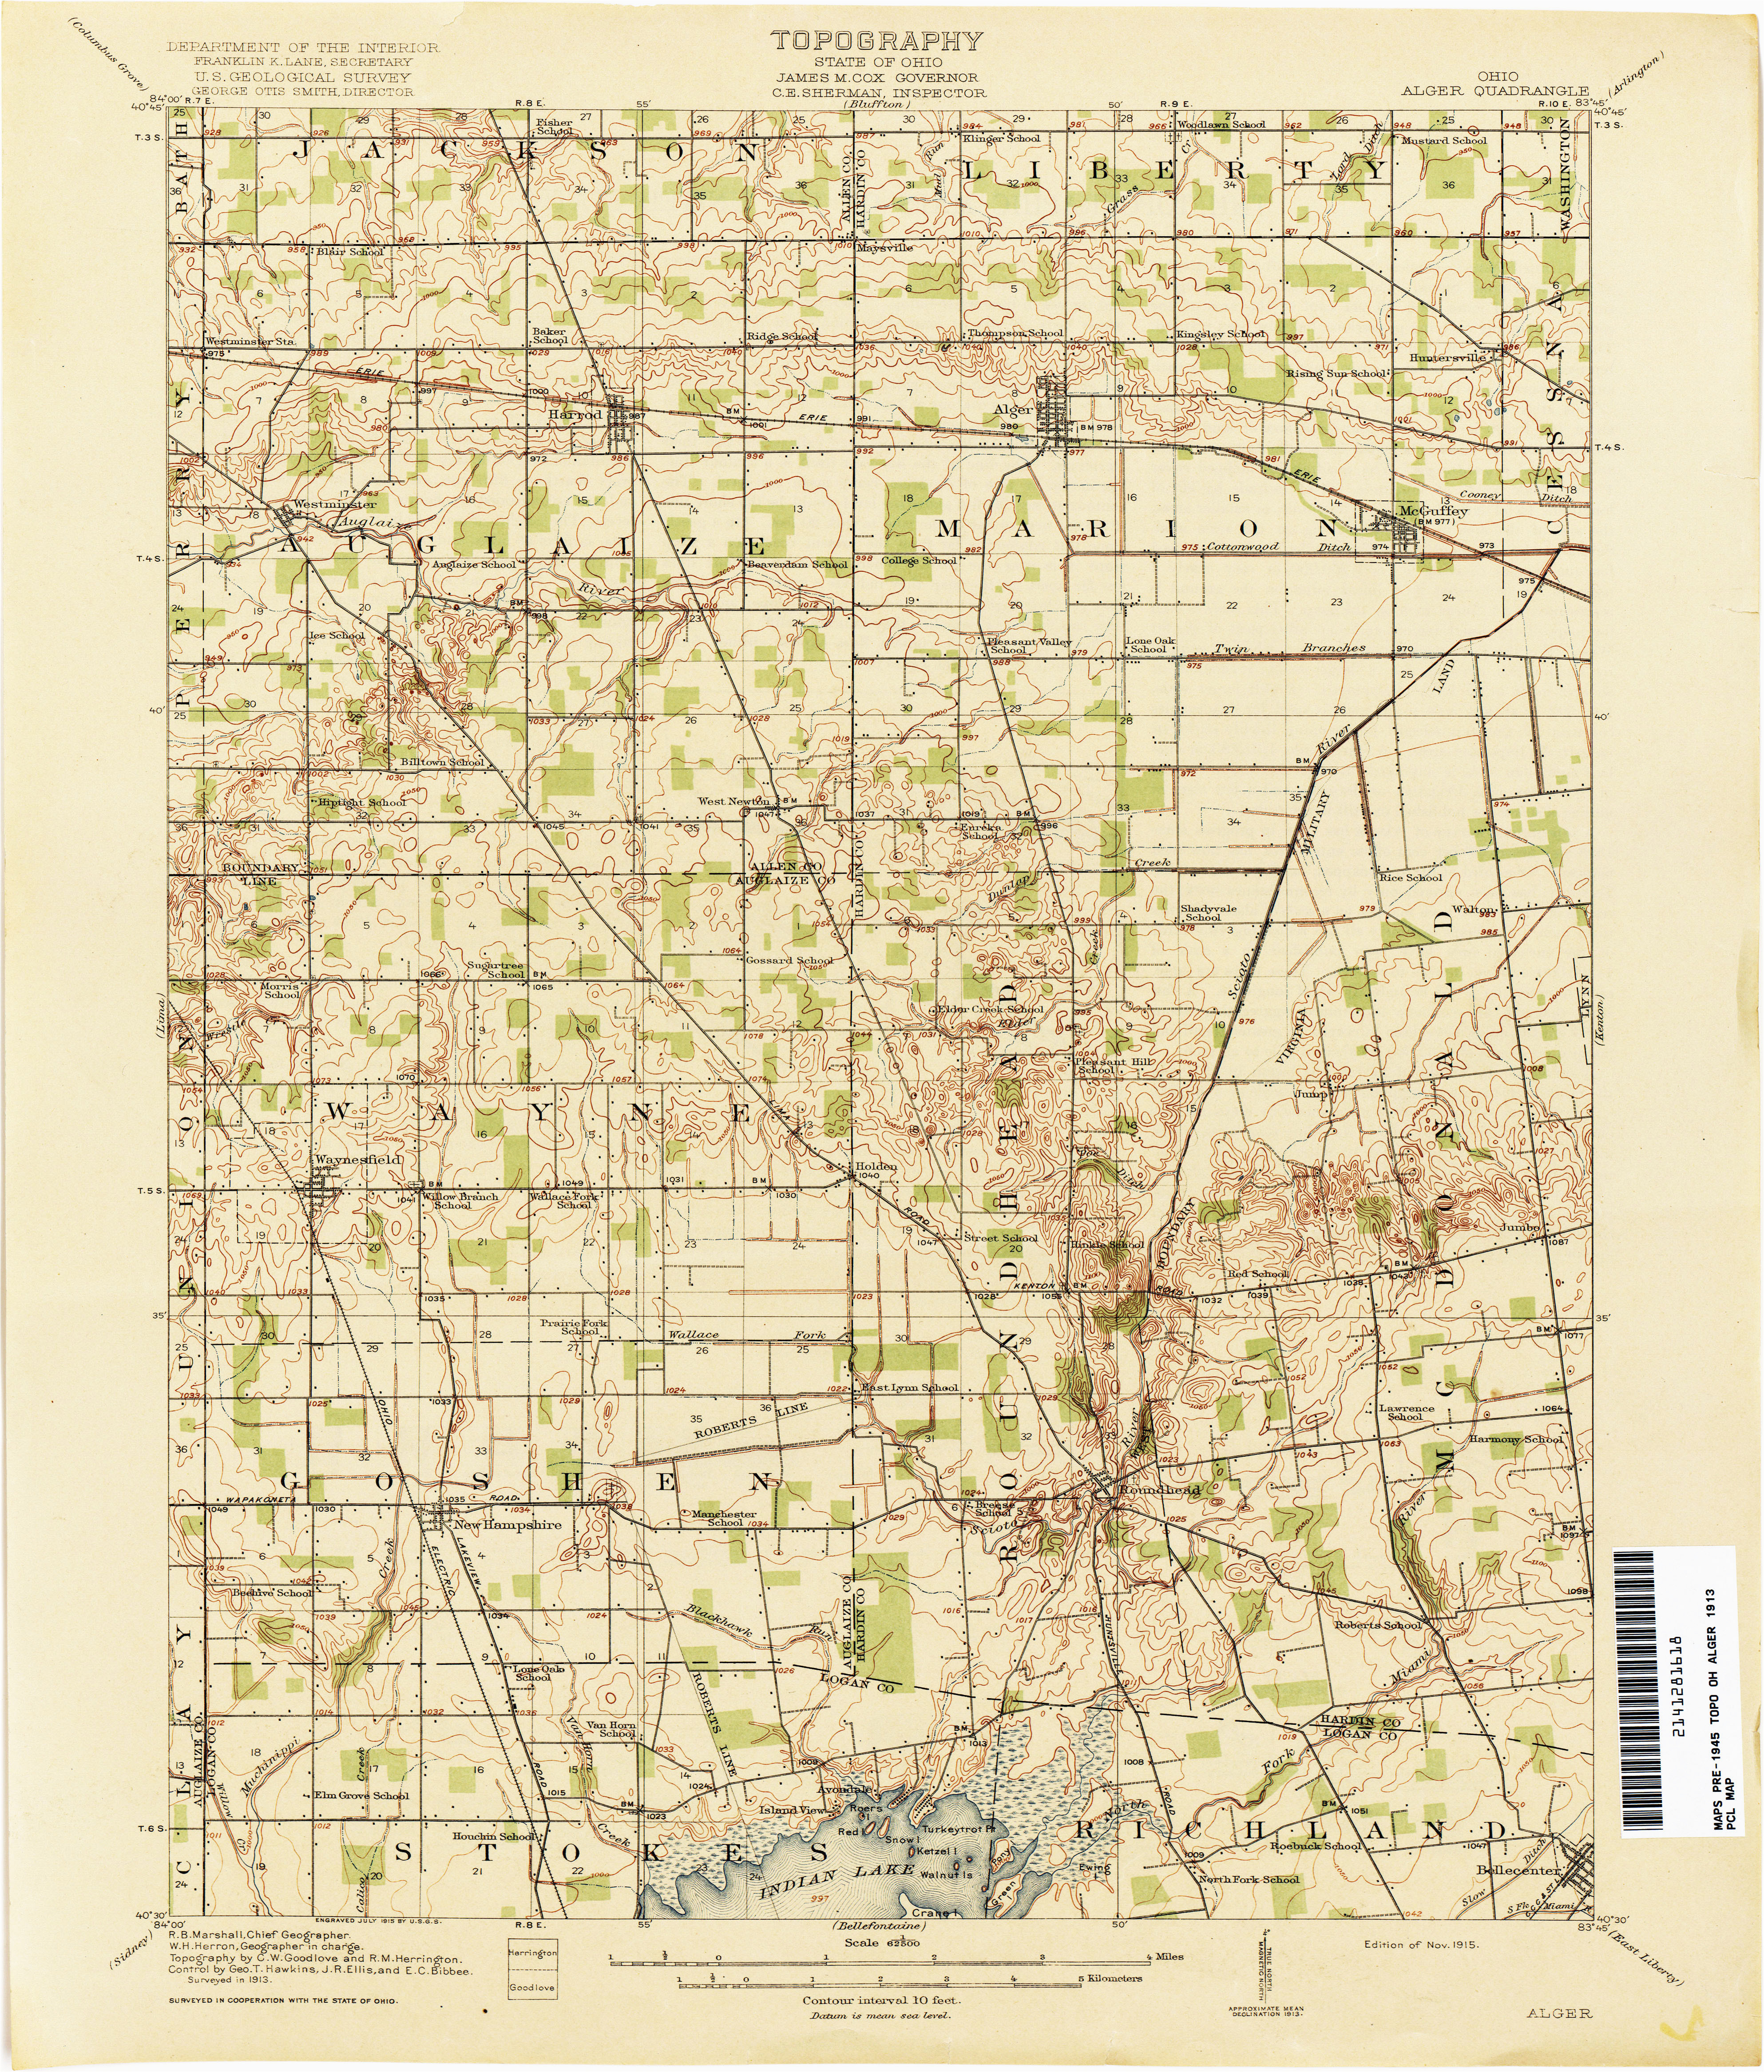 Street Map Of Columbus Ohio Ohio Historical topographic Maps Perry Castaa Eda Map Collection